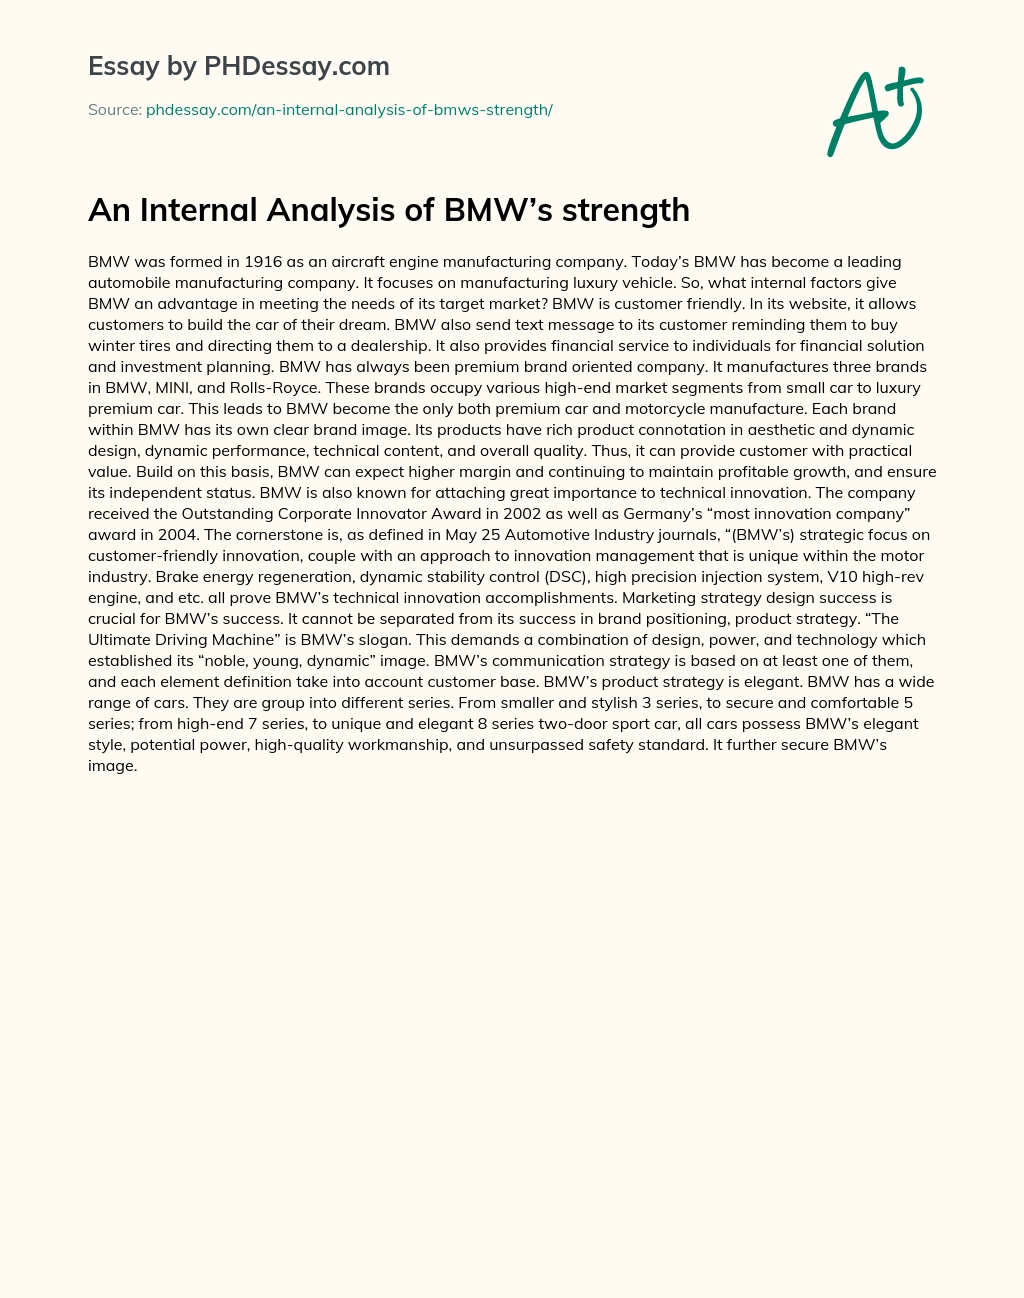 An Internal Analysis of BMW’s strength essay